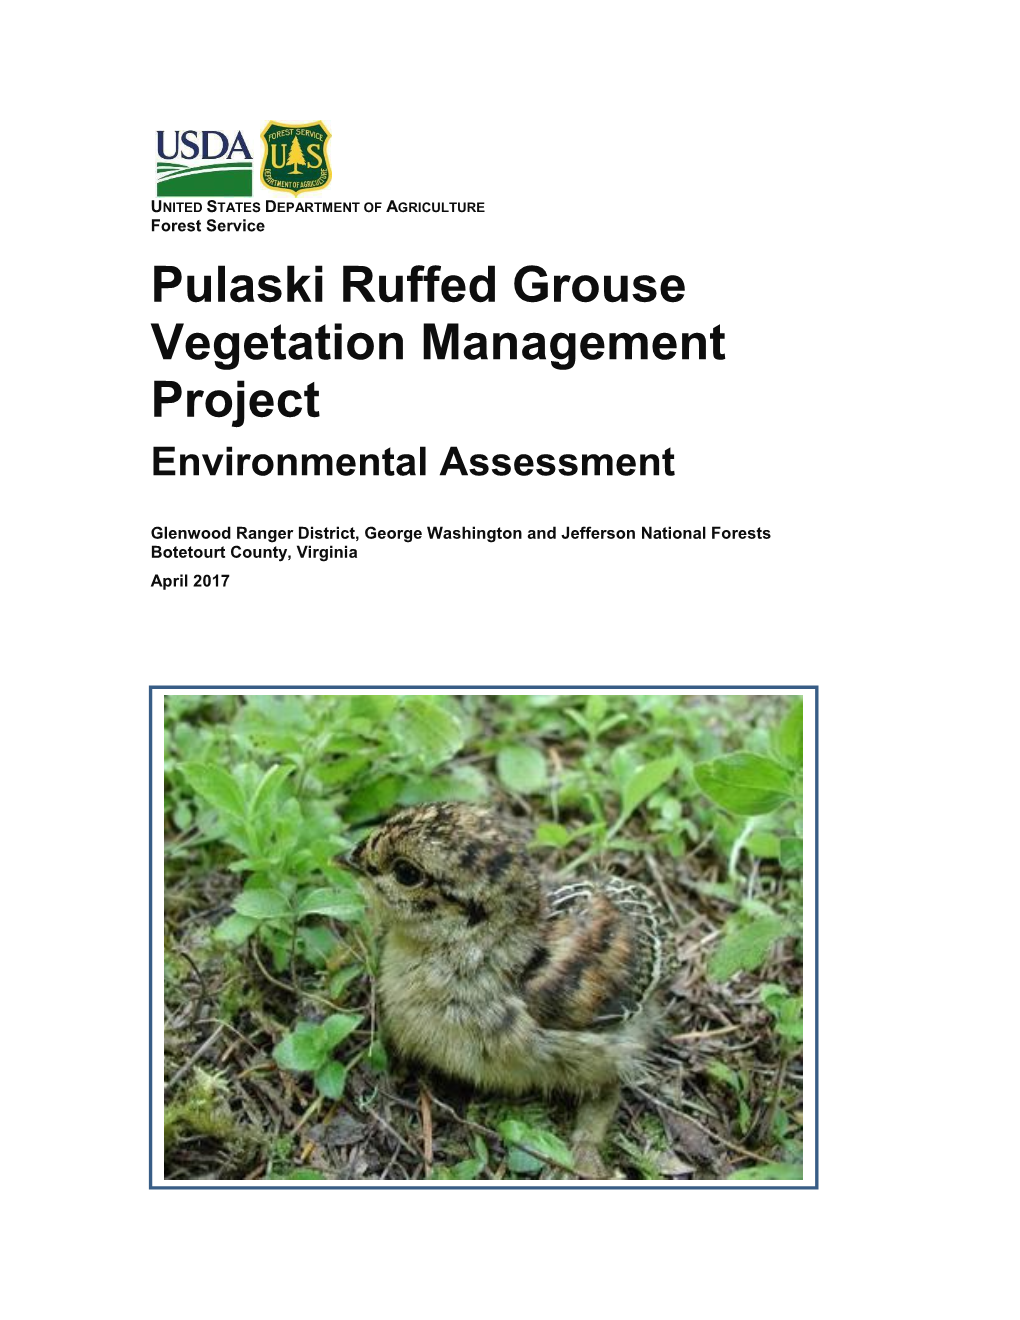 Pulaski Ruffed Grouse Vegetation Management Project Environmental Assessment